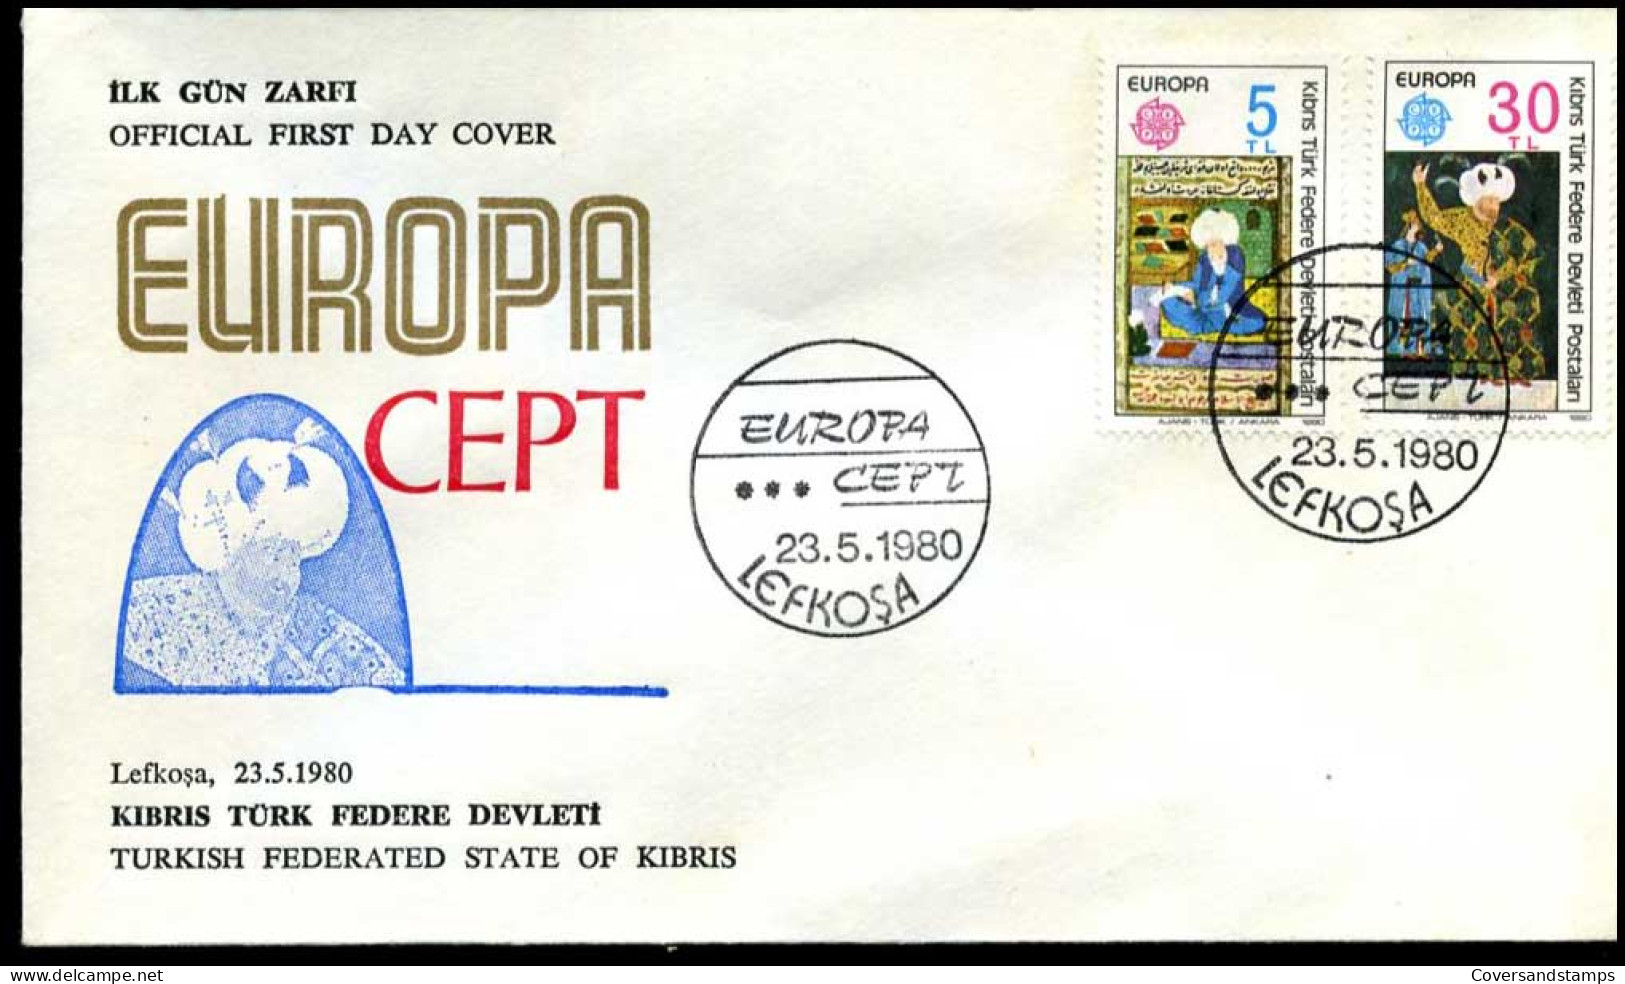  Turks Cyprus  - FDC - Europa CEPT 1980 - 1980